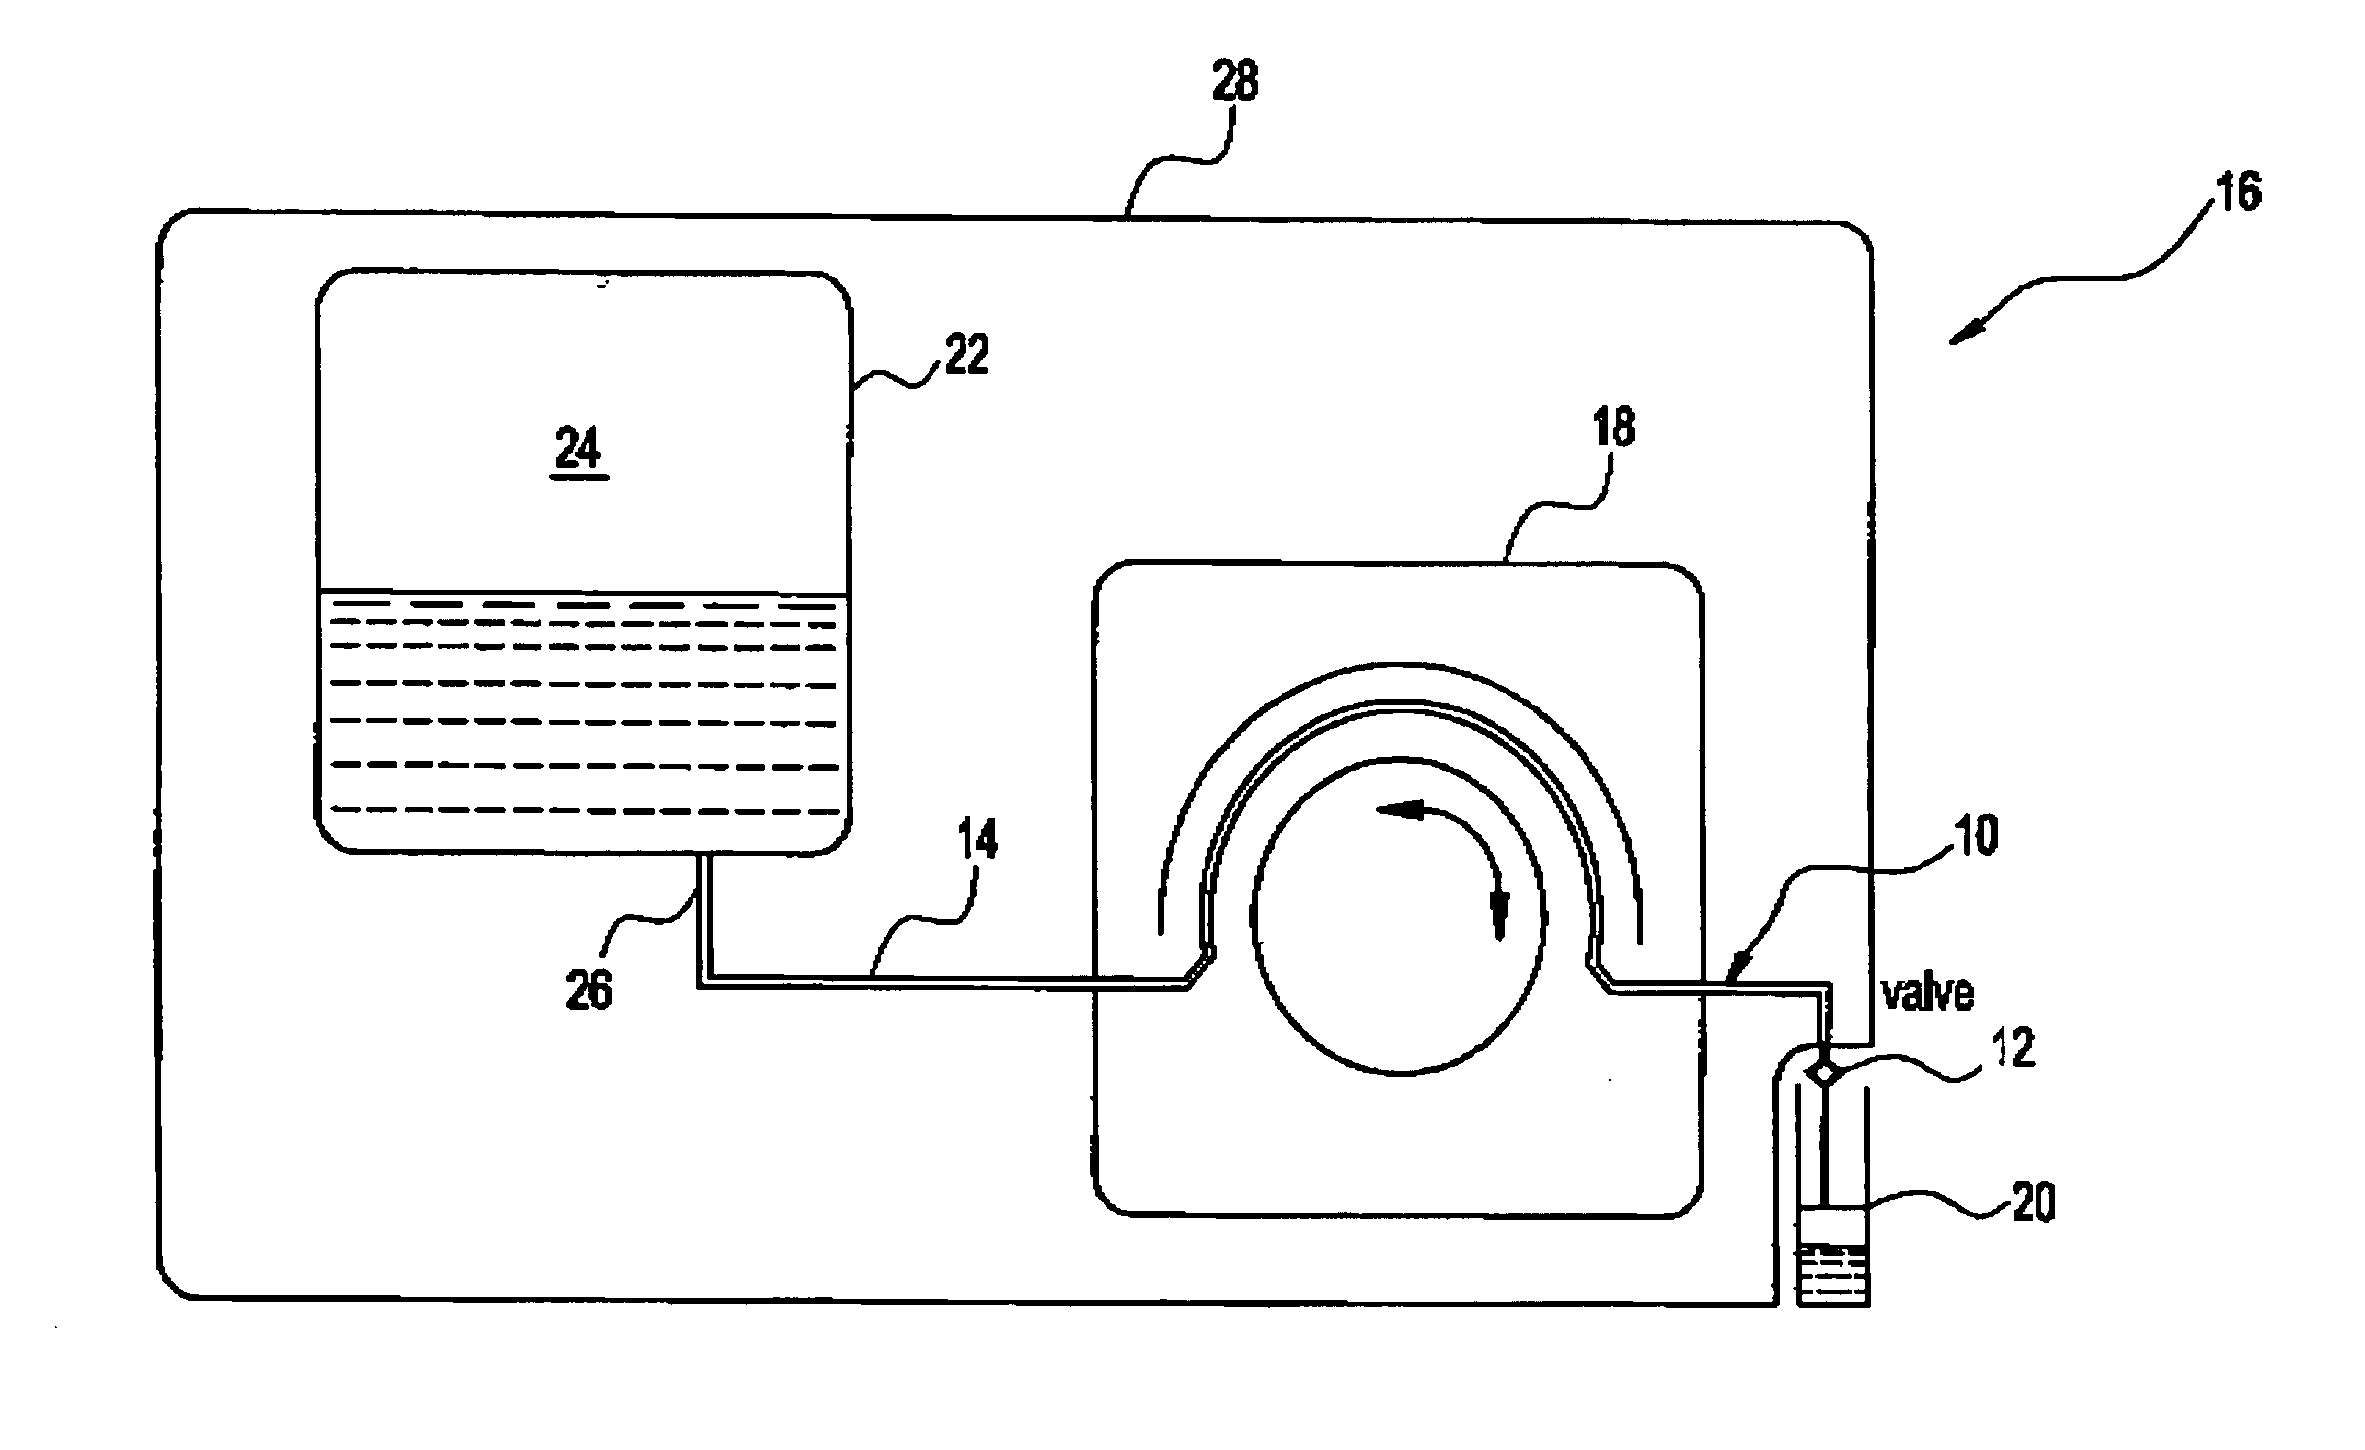 One-way valve and apparatus using the valve